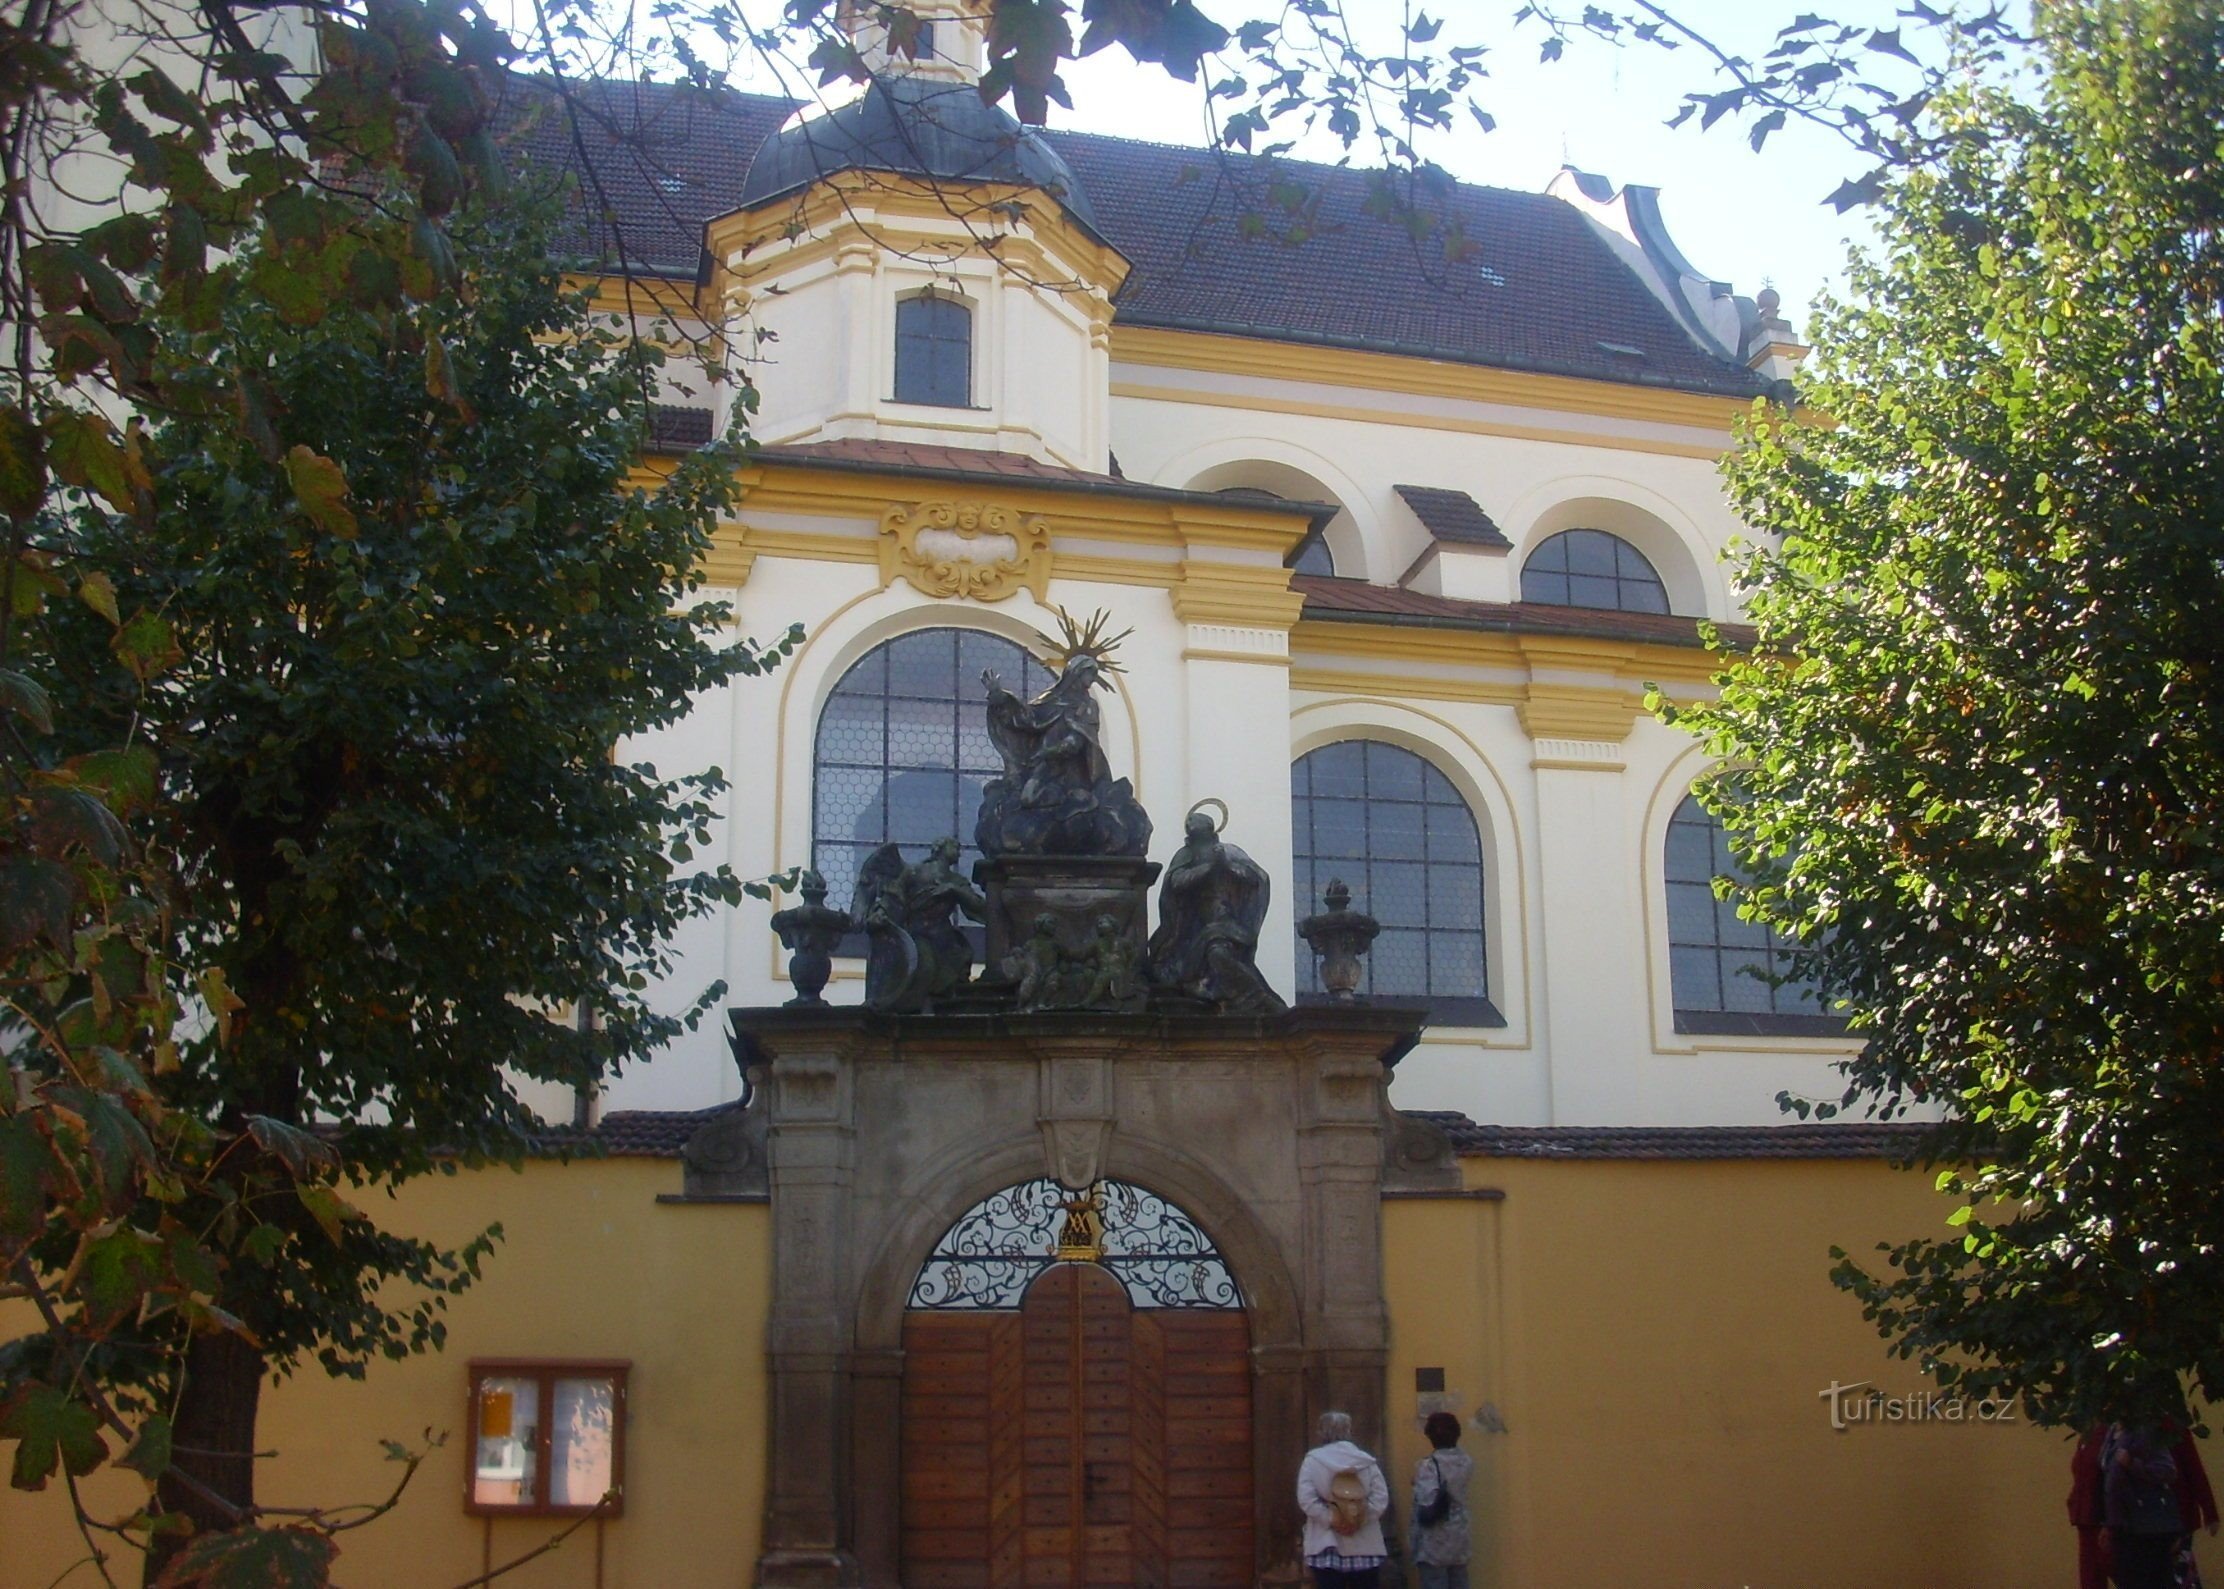 Lipník - είσοδος στην εκκλησία δίπλα στο πάρκο